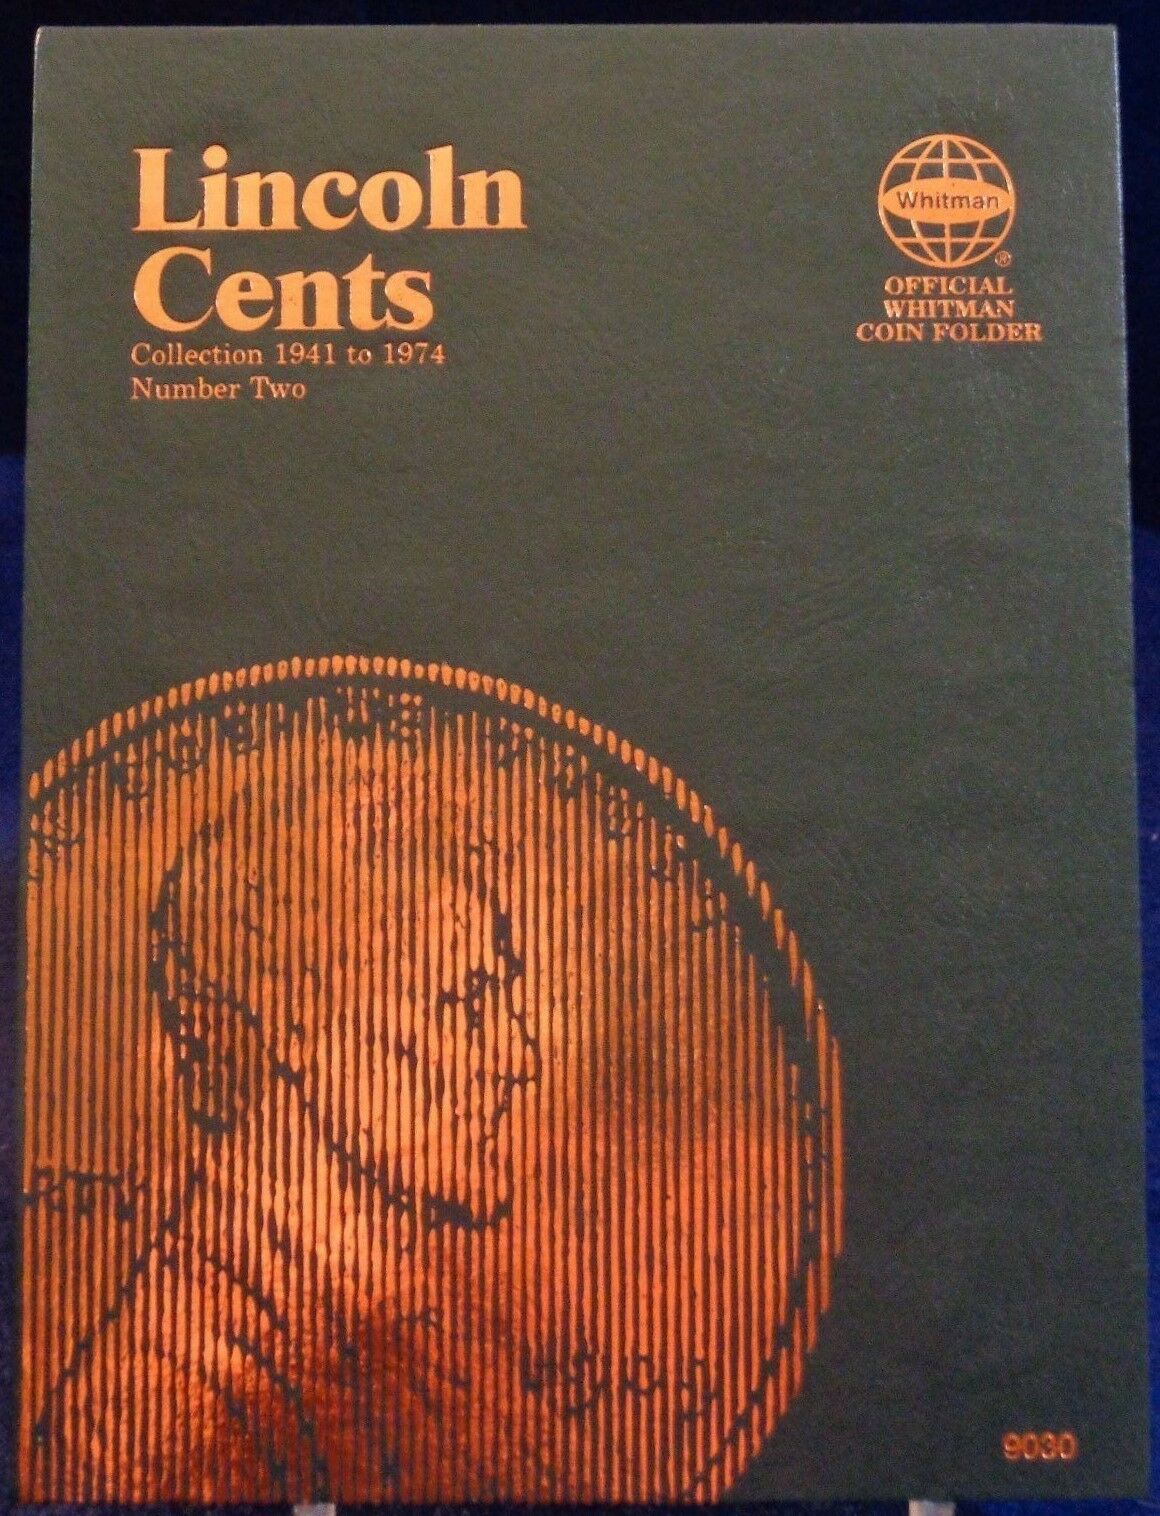 Whitman Lincoln Cents Vol#2  1941-1974 Coin Folder, Penny Album Book #9030